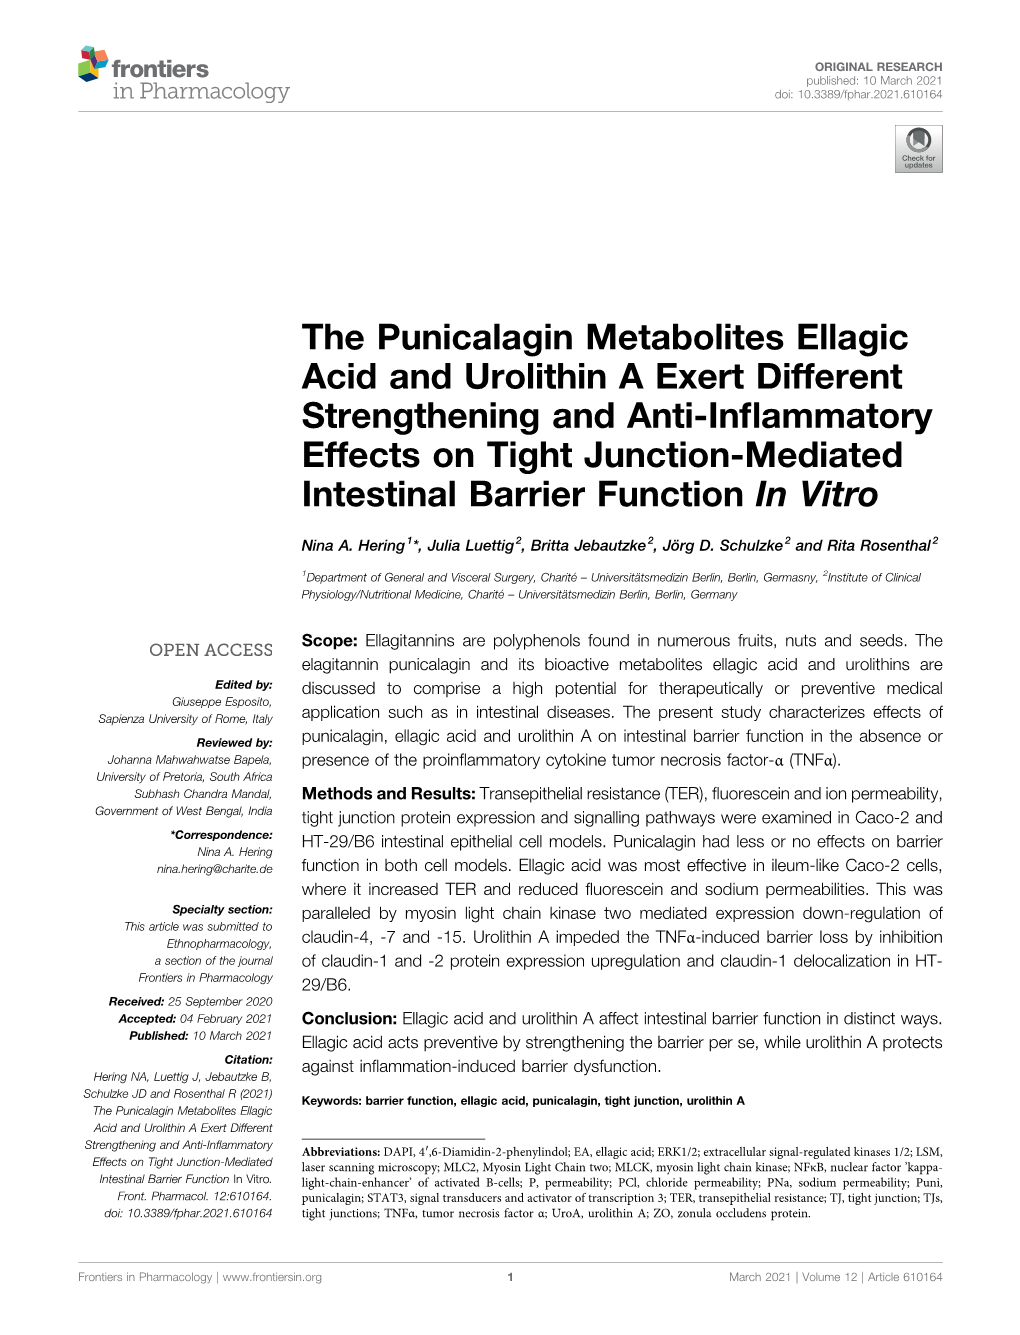 The Punicalagin Metabolites Ellagic Acid and Urolithin a Exert Different